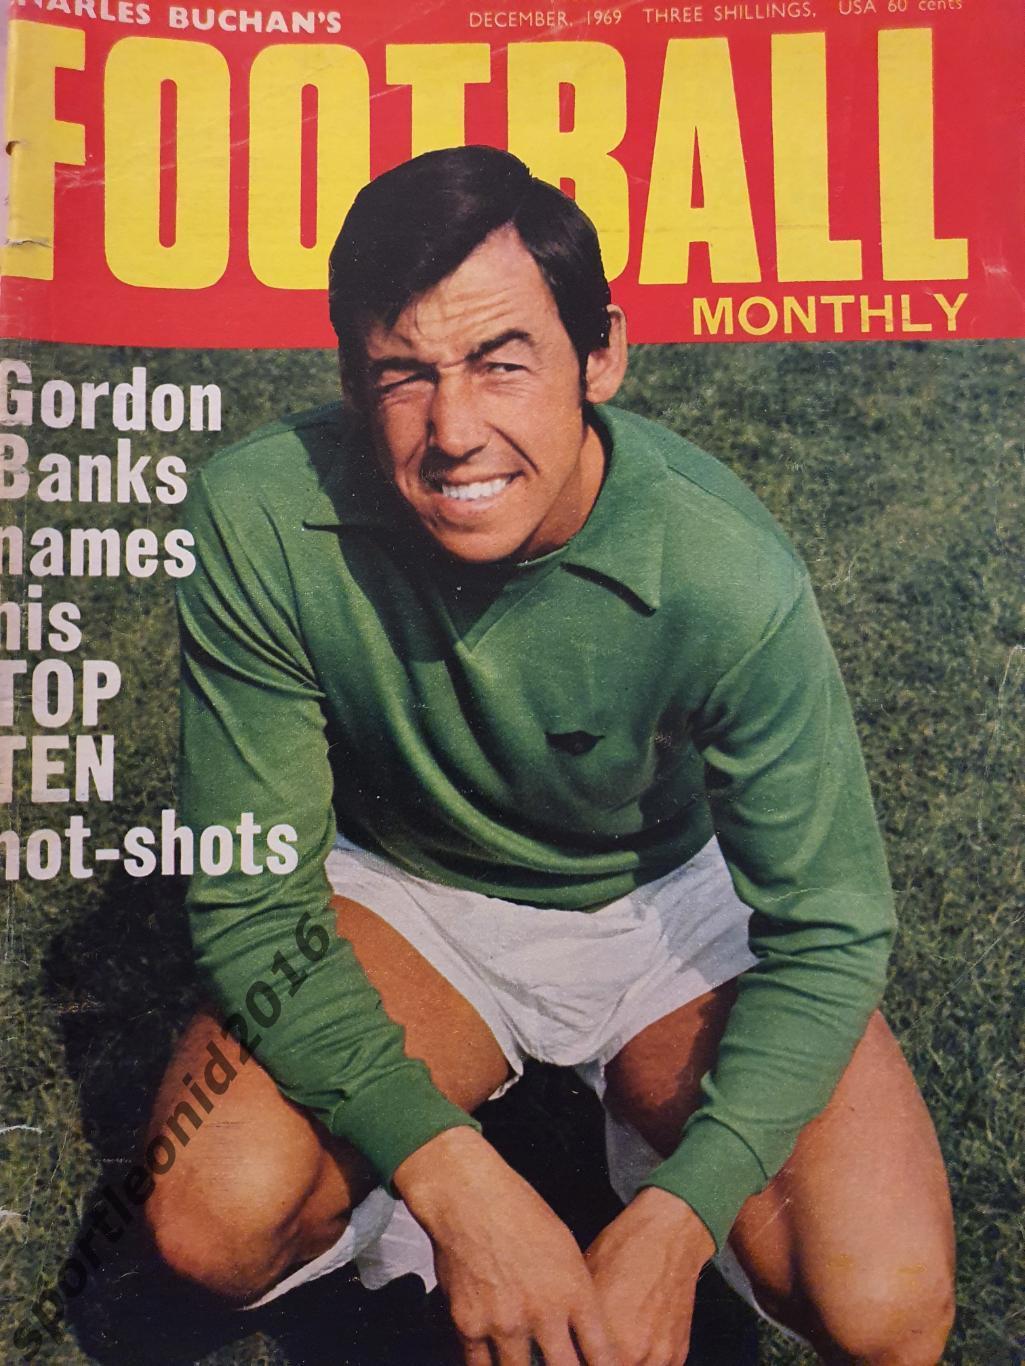 Football Monthly Charles Buchans's 1969 4 выпуска. 2